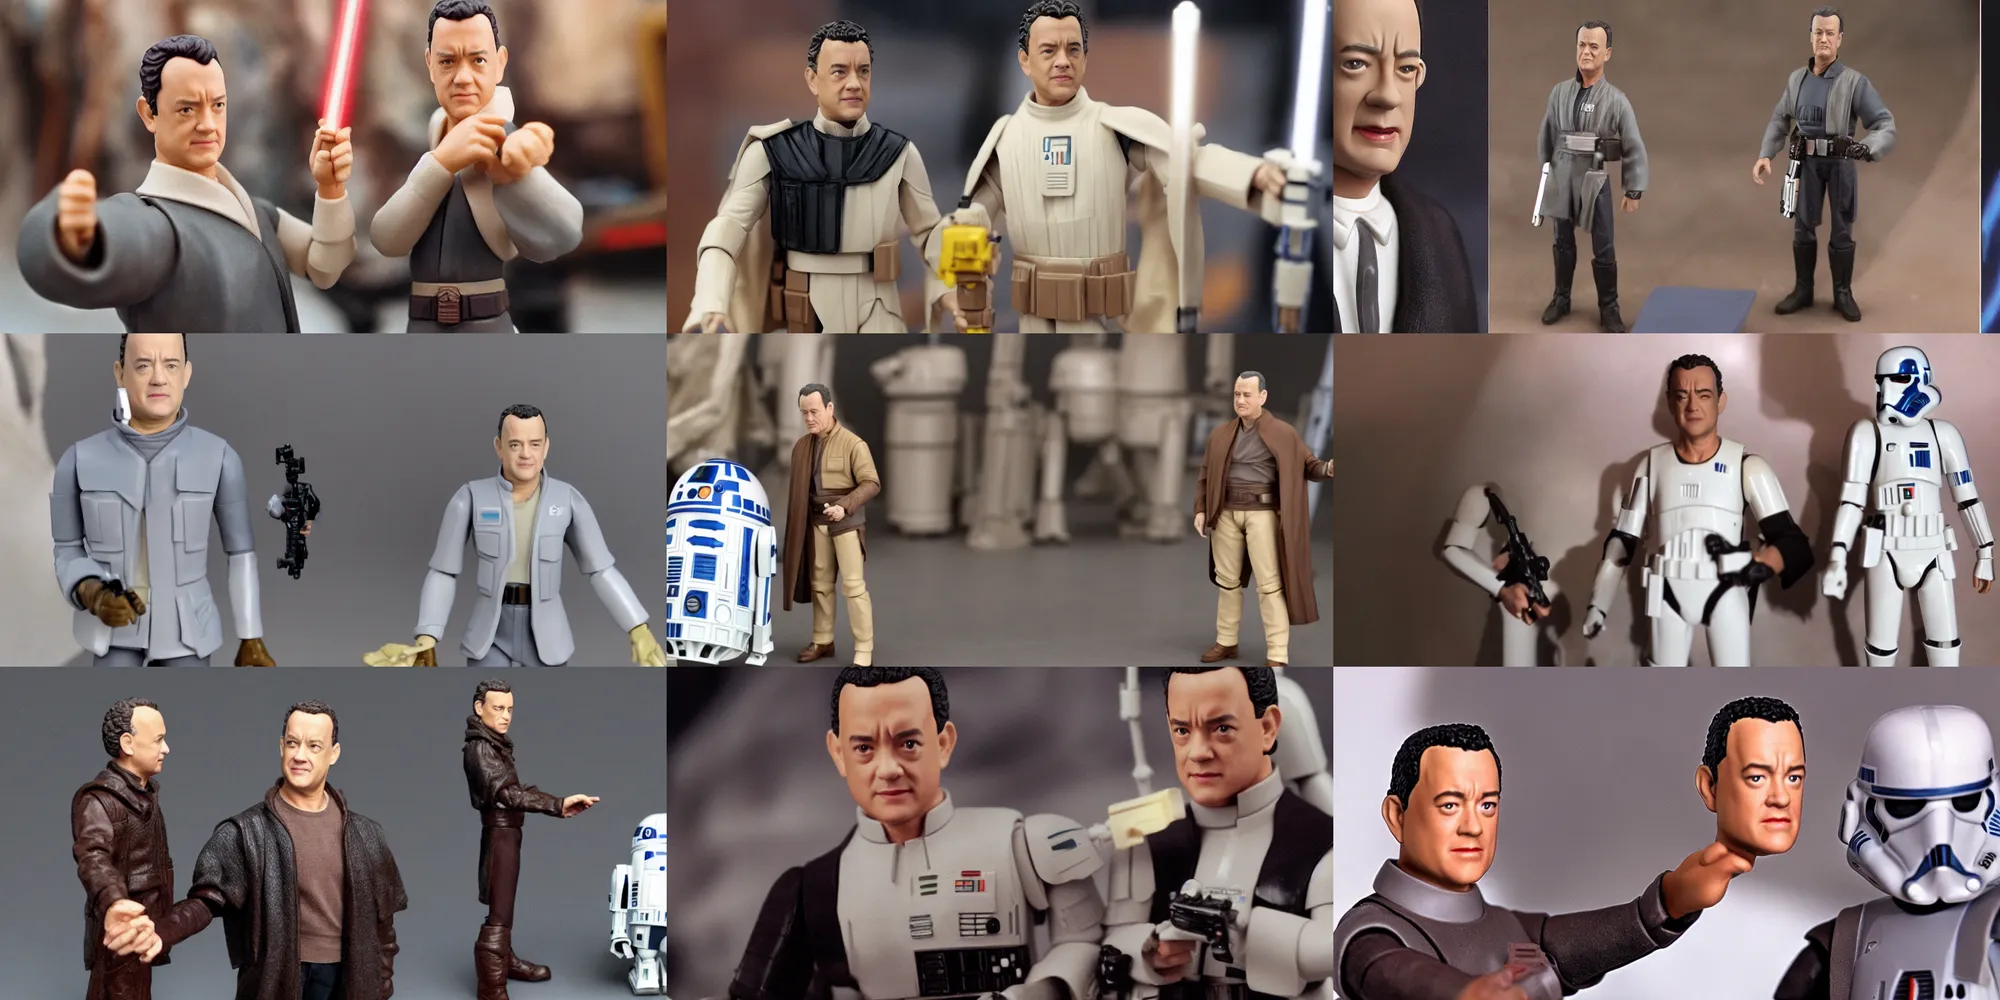 Prompt: Tom Hanks as a star wars figurine